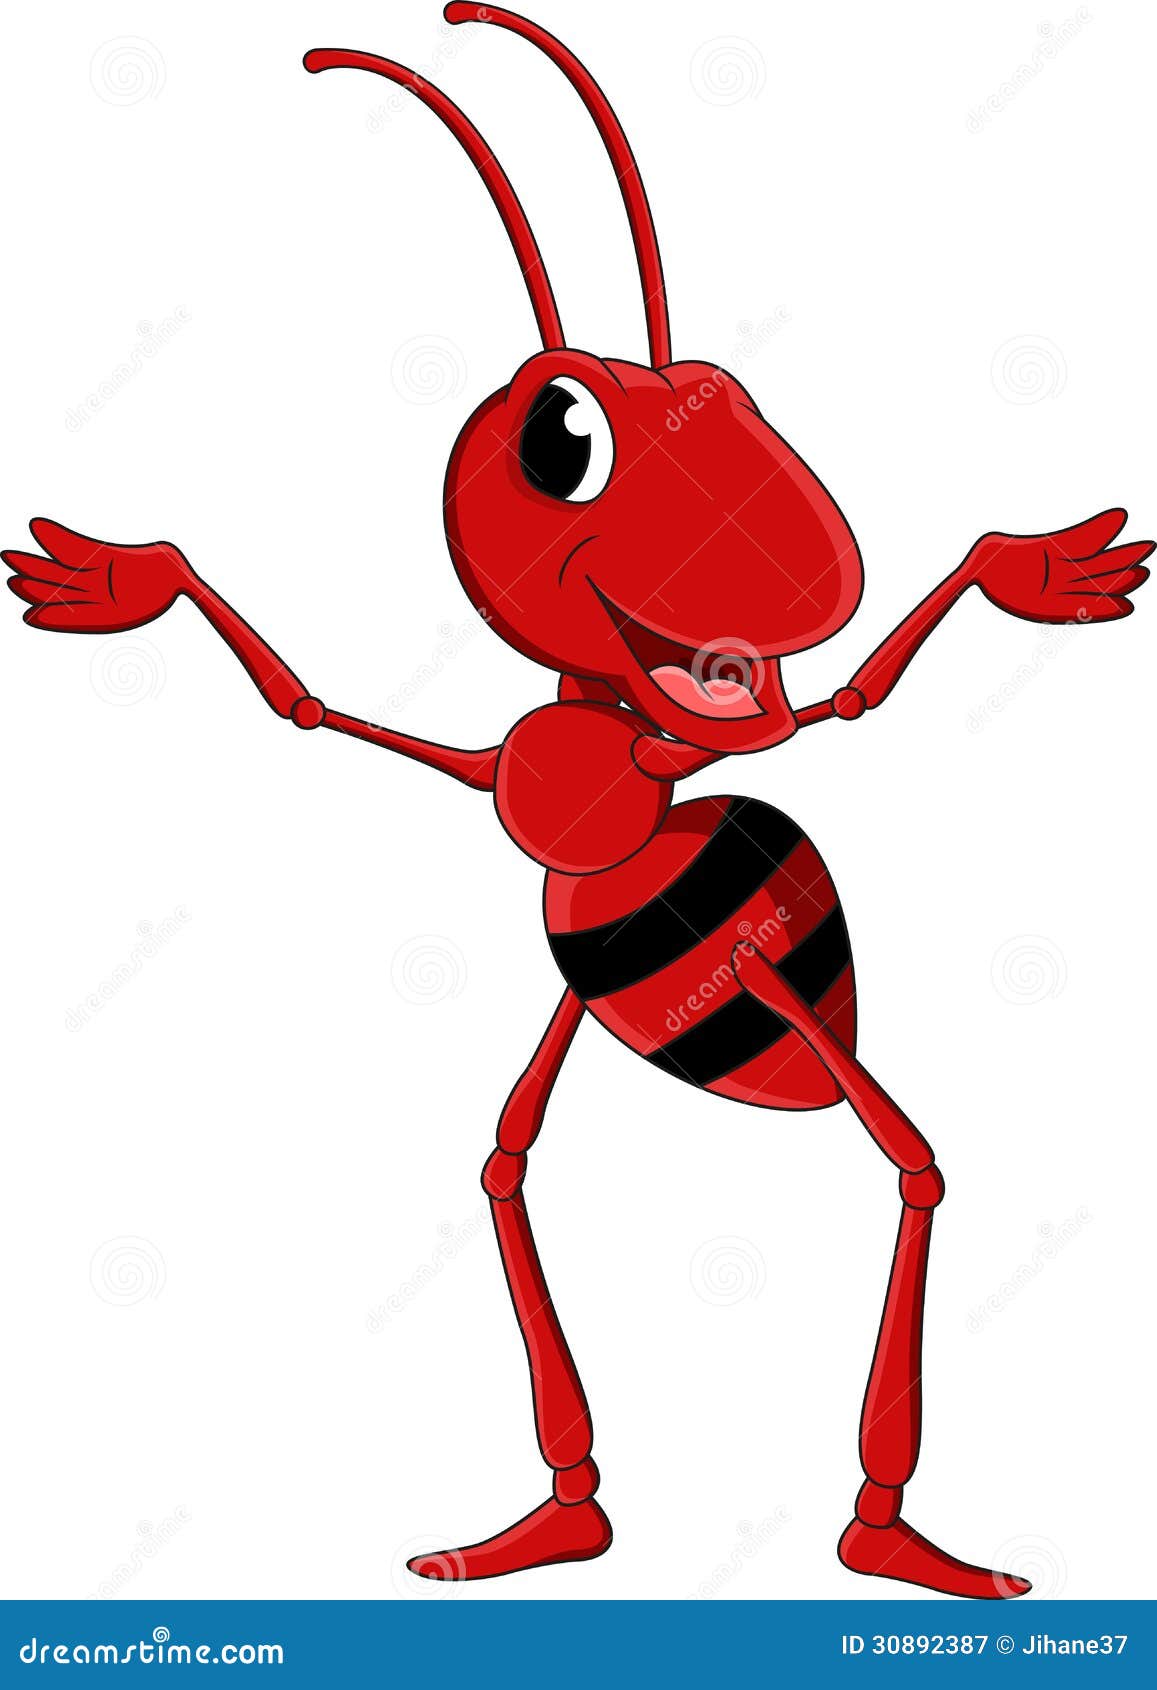 Cute red ant cartoon stock illustration. Illustration of friendly - 30892387